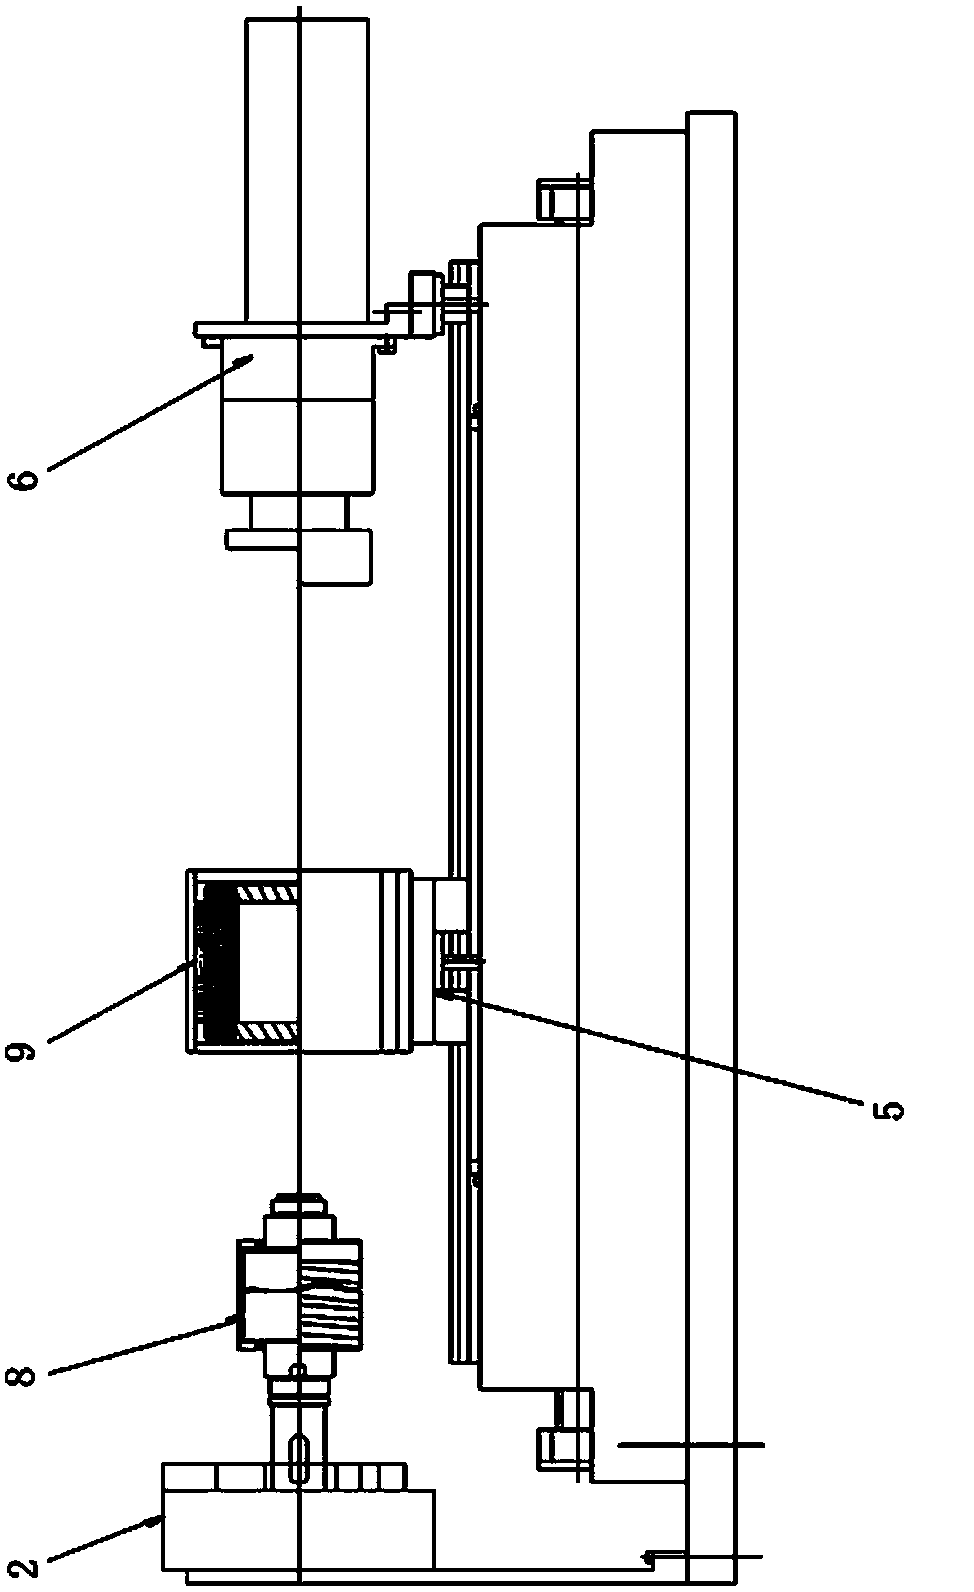 Assembling workbench for rotor and stator of servo motor